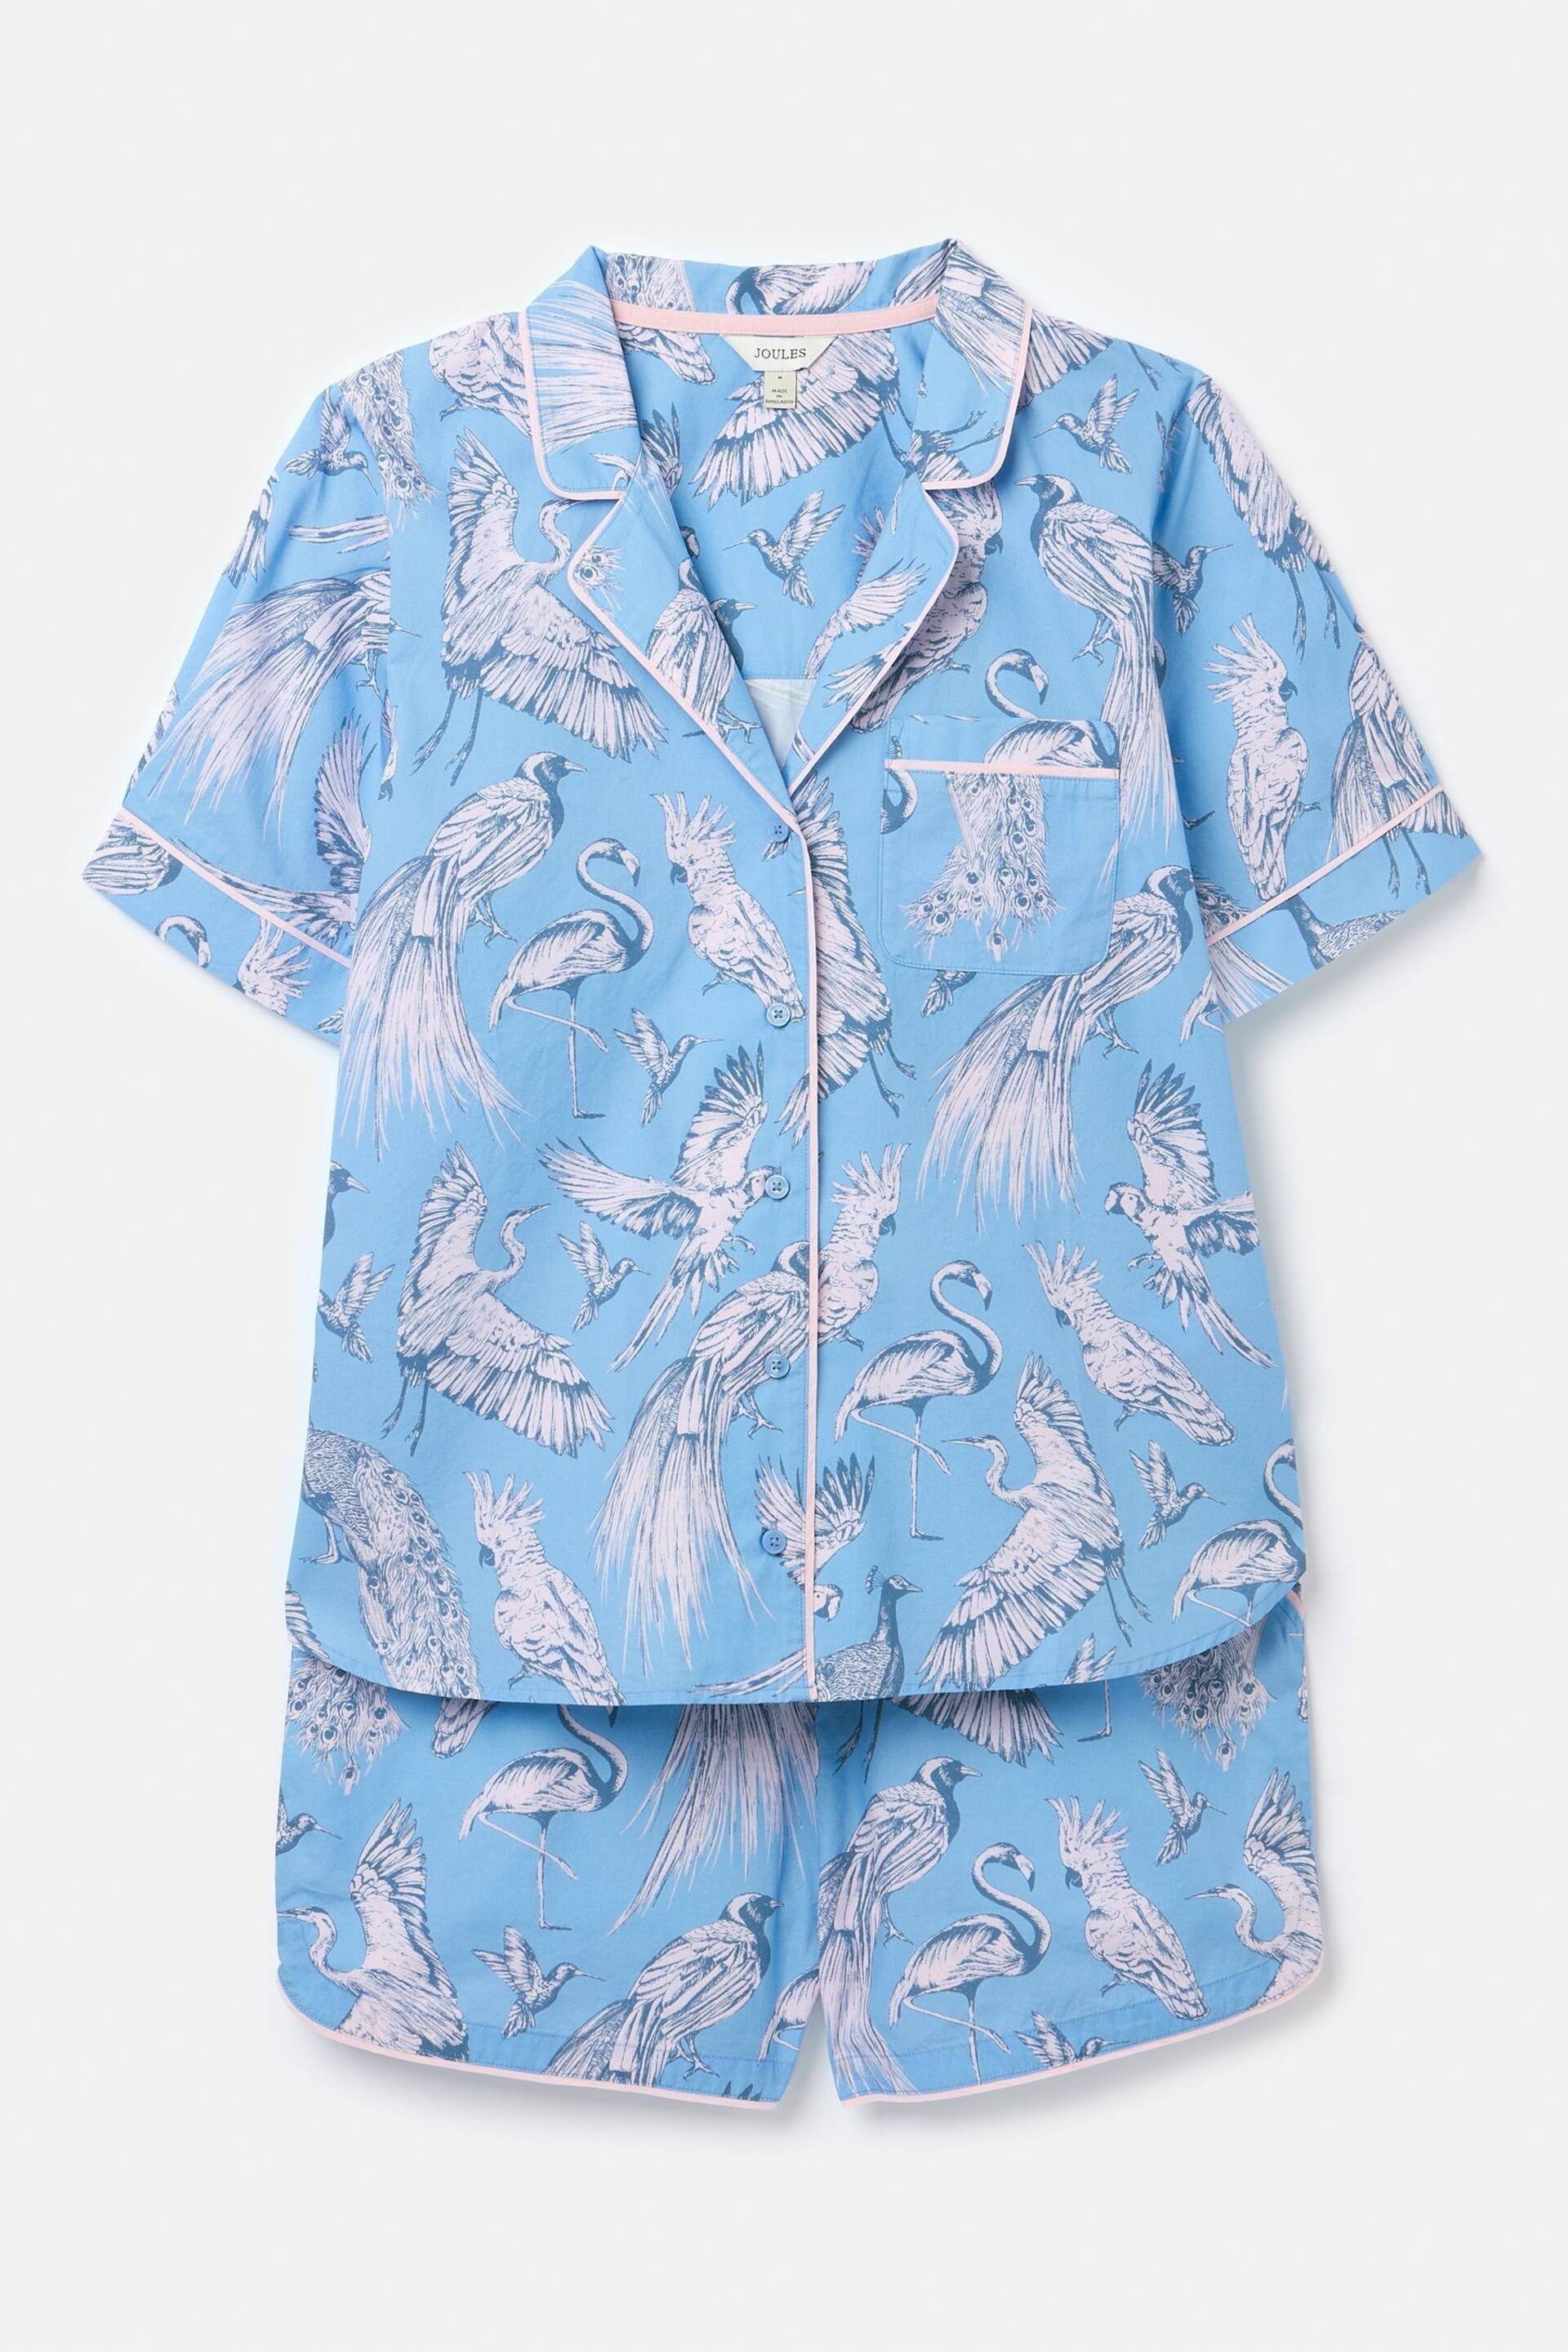 Joules Olivia Blue Pyjama Set - Image 6 of 6